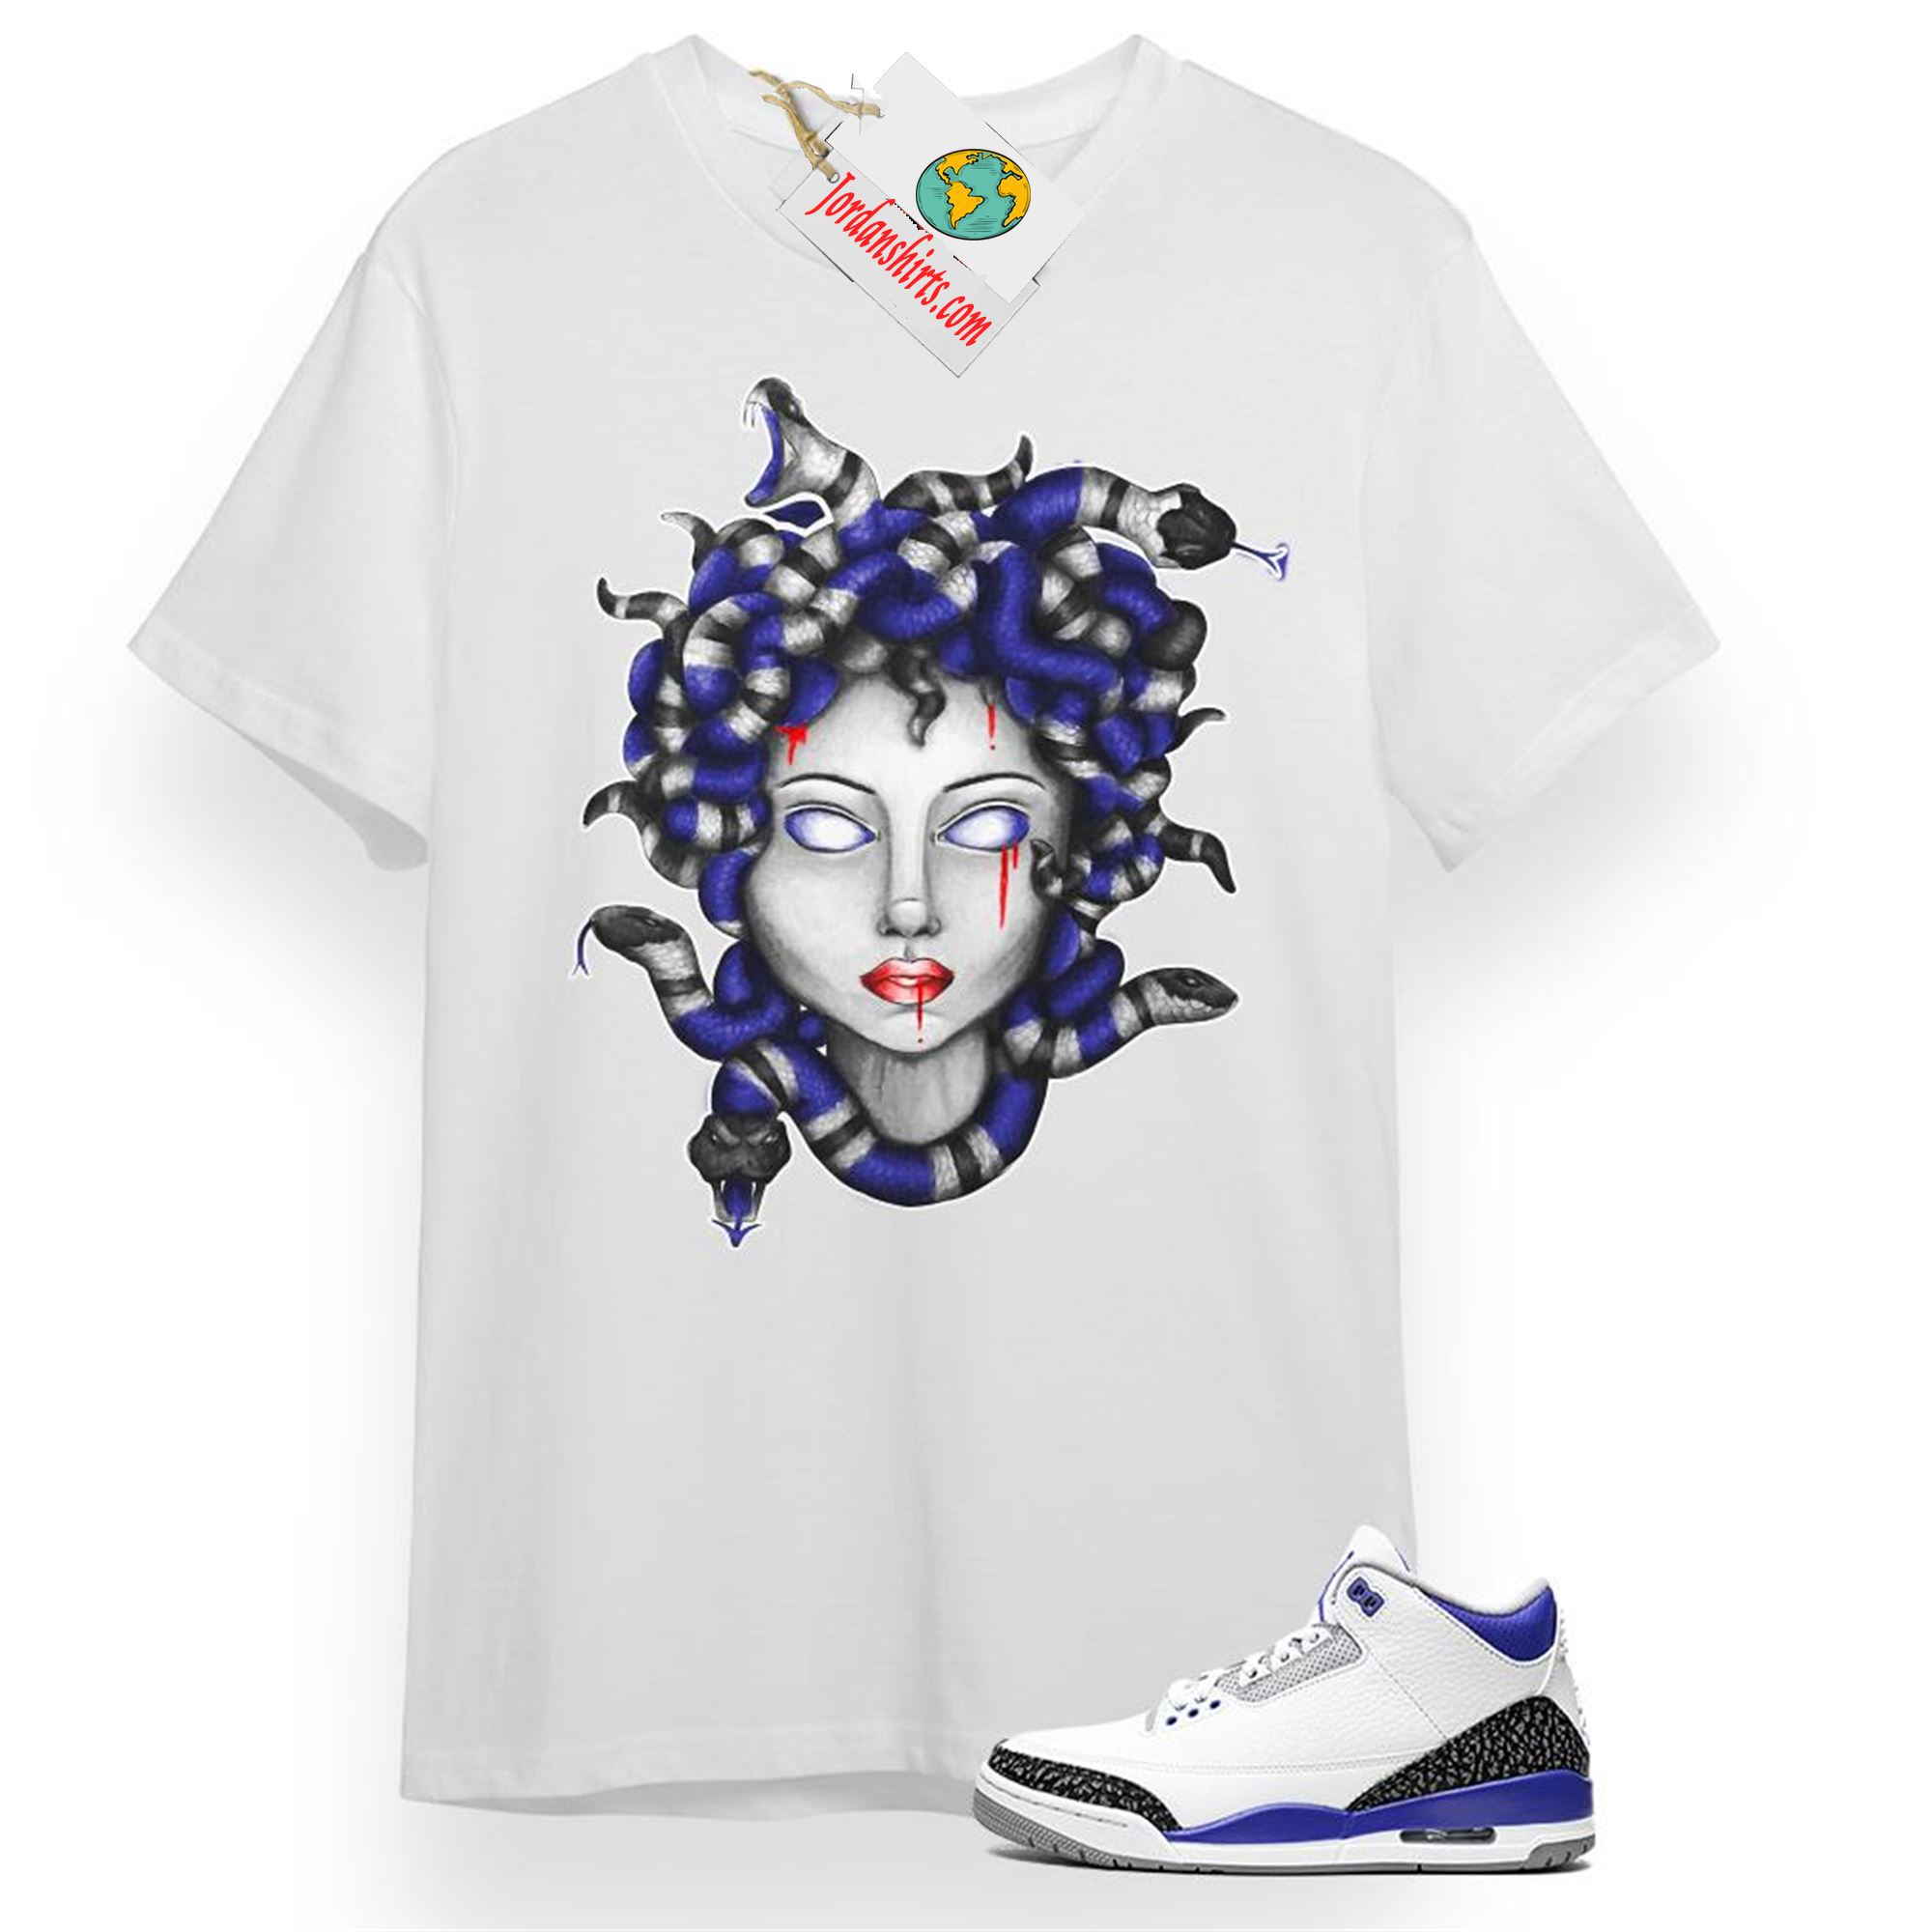 Jordan 3 Shirt, Medusa Snake White T-shirt Air Jordan 3 Racer Blue 3s Size Up To 5xl